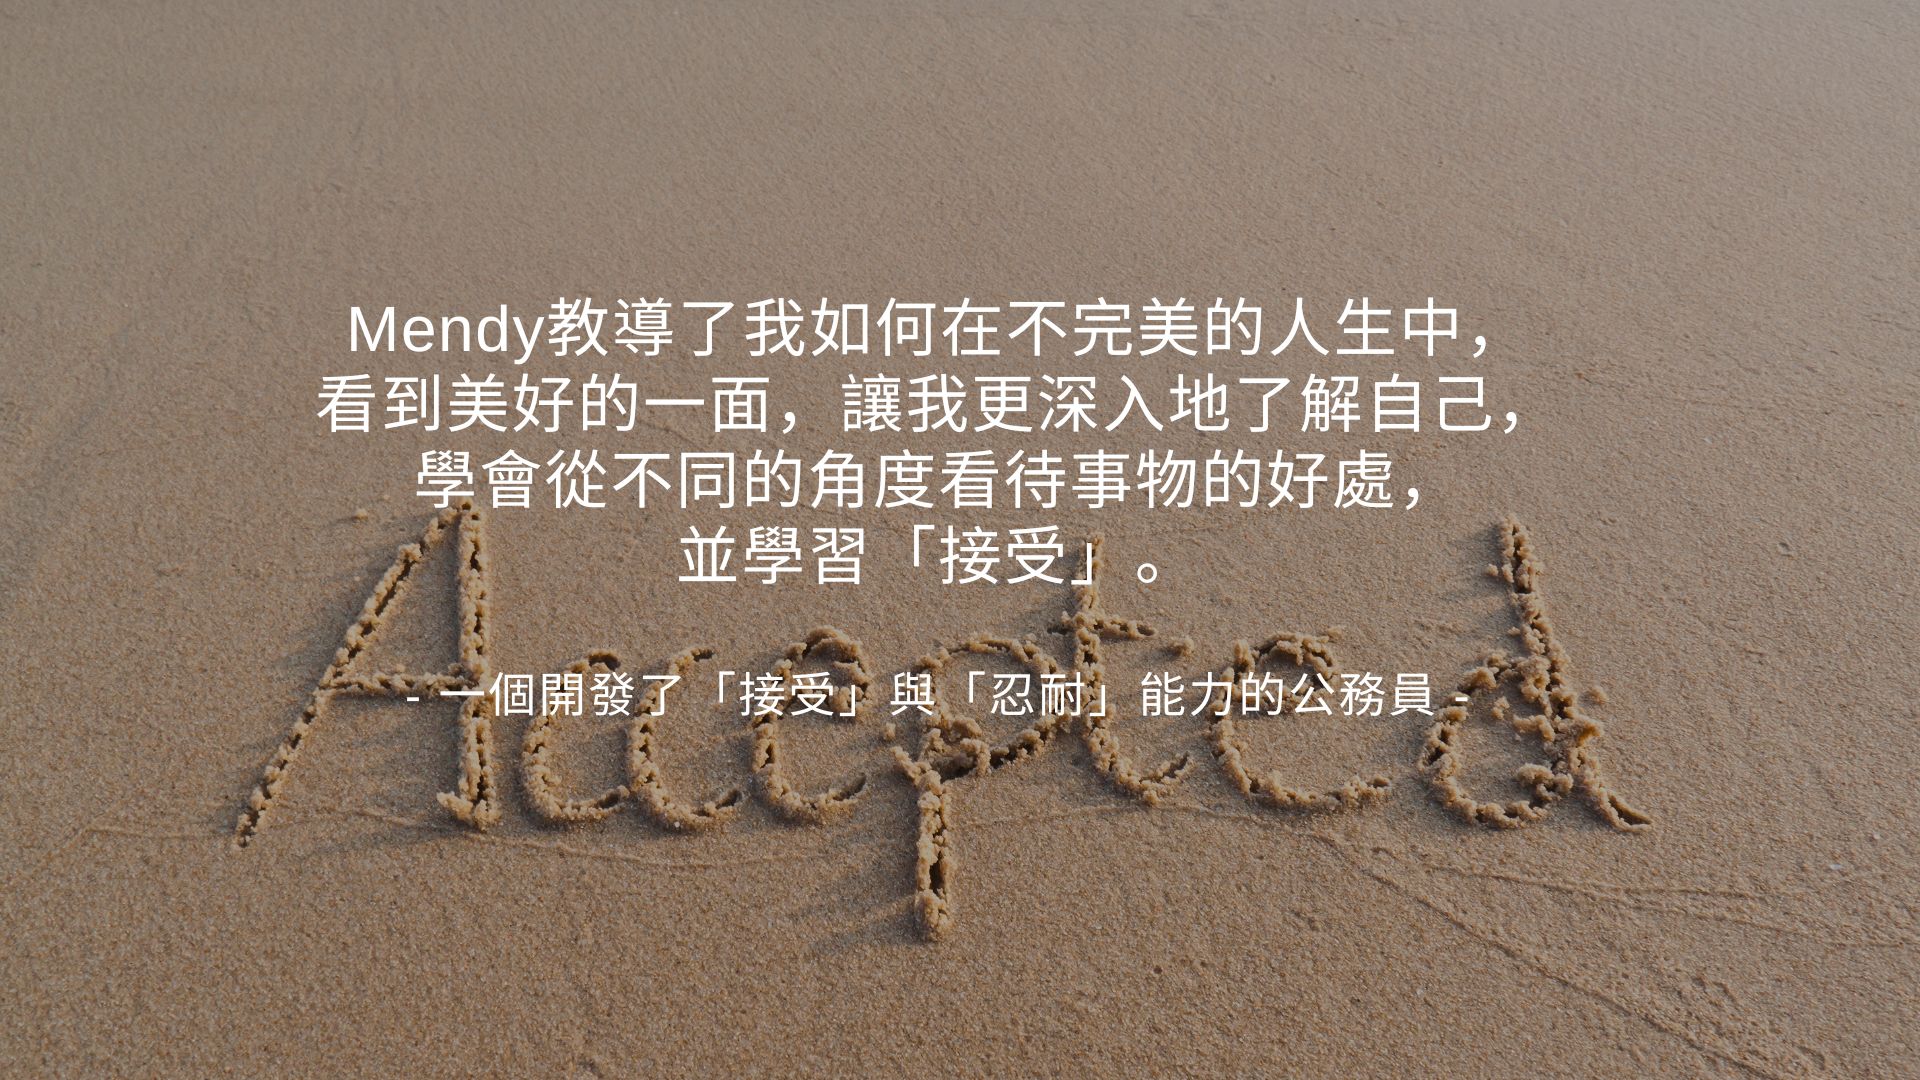 焦慮 Chinese text written in the sand on a beach.